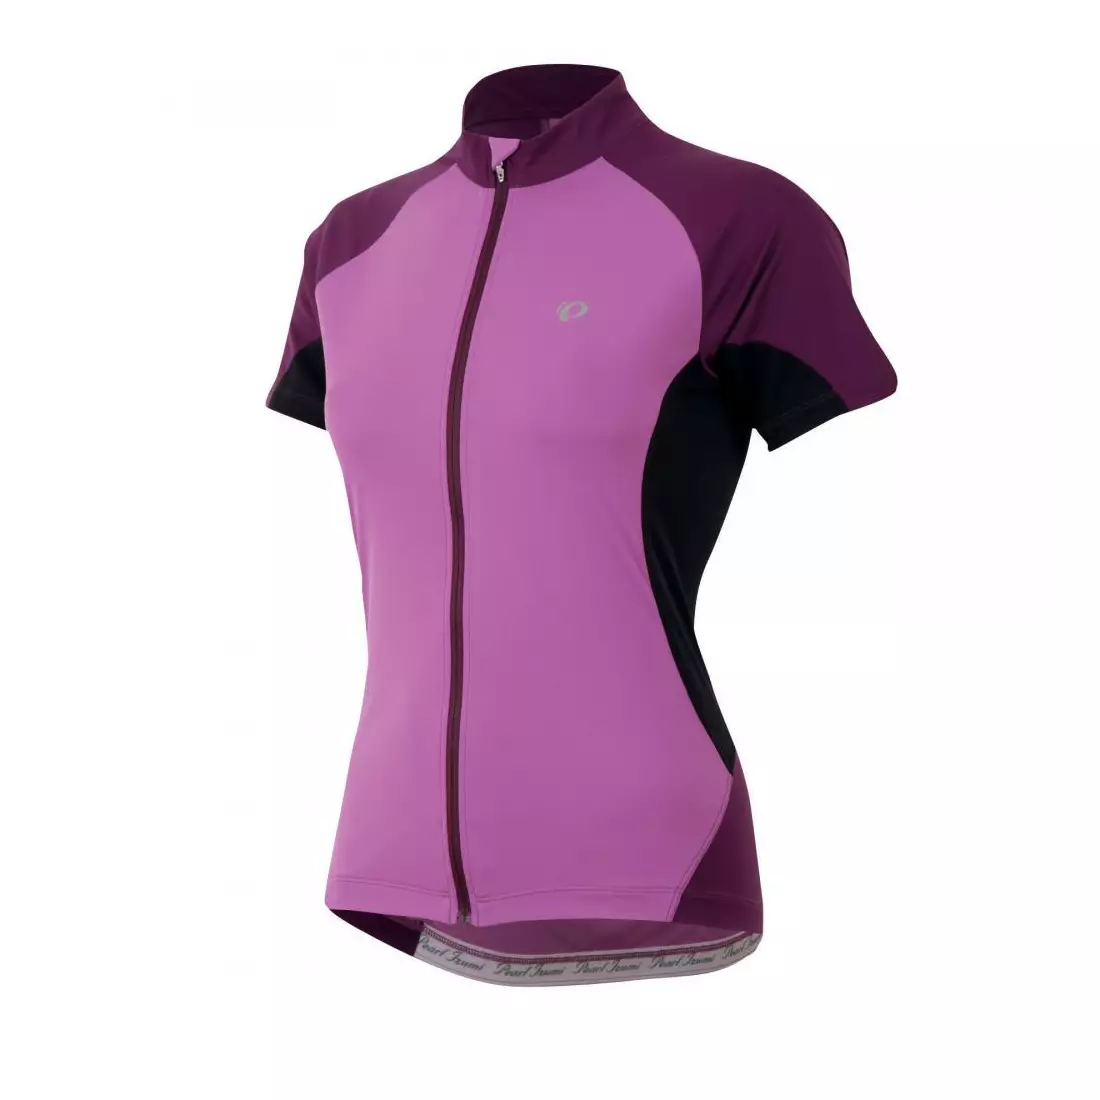 PEARL IZUMI SYMPHONY women's cycling jersey 11221305-4LS